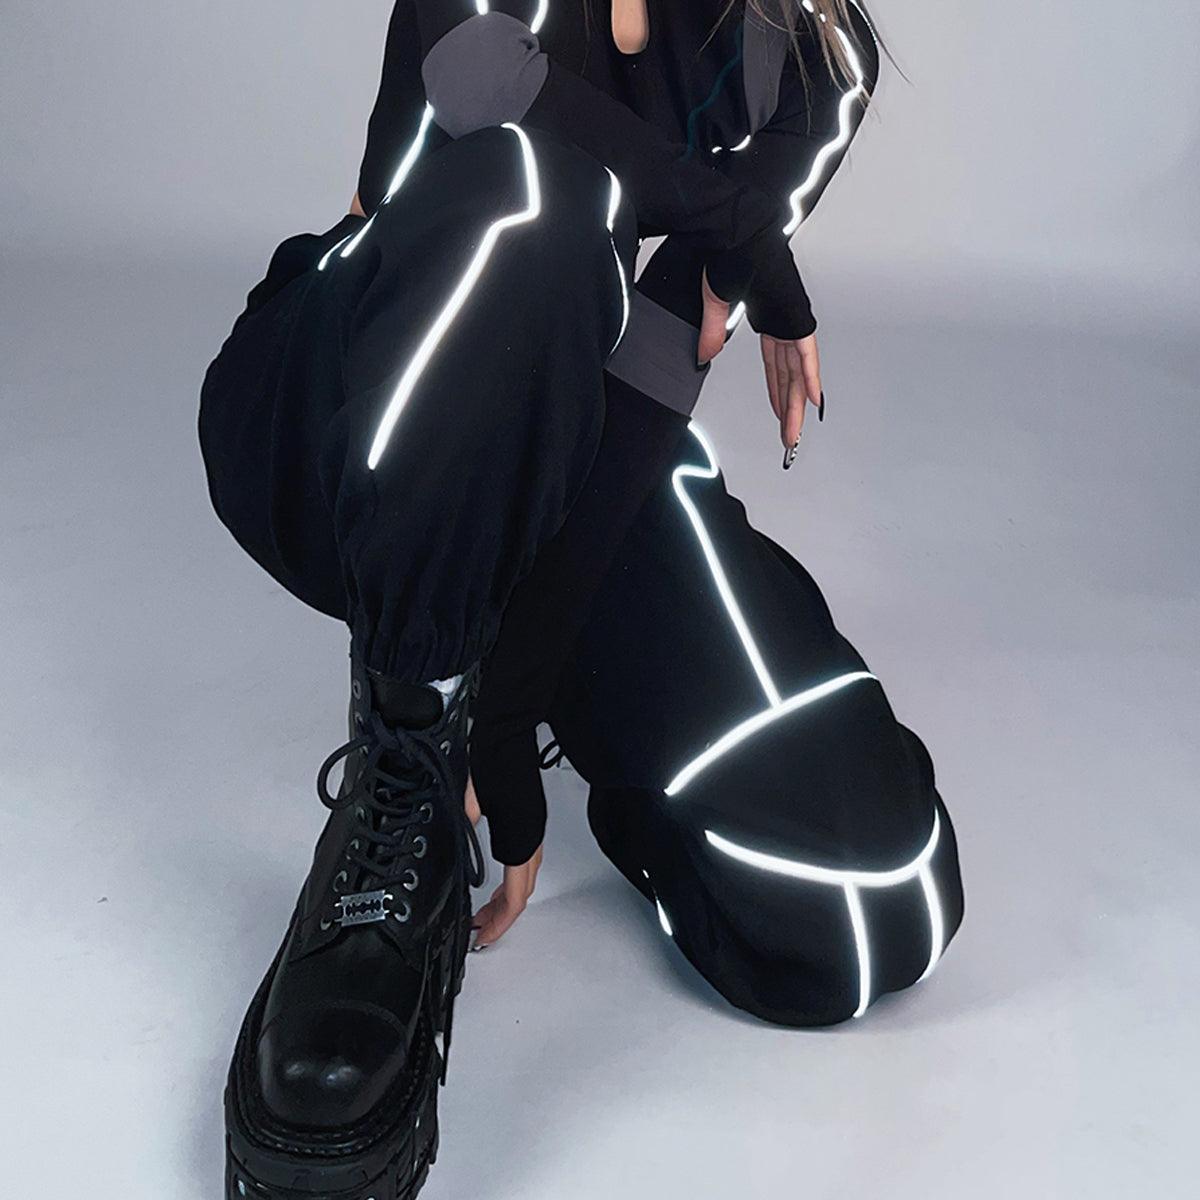 Light Reflective Lines Cyberpunk Pants - Aesthetic Clothes Shop